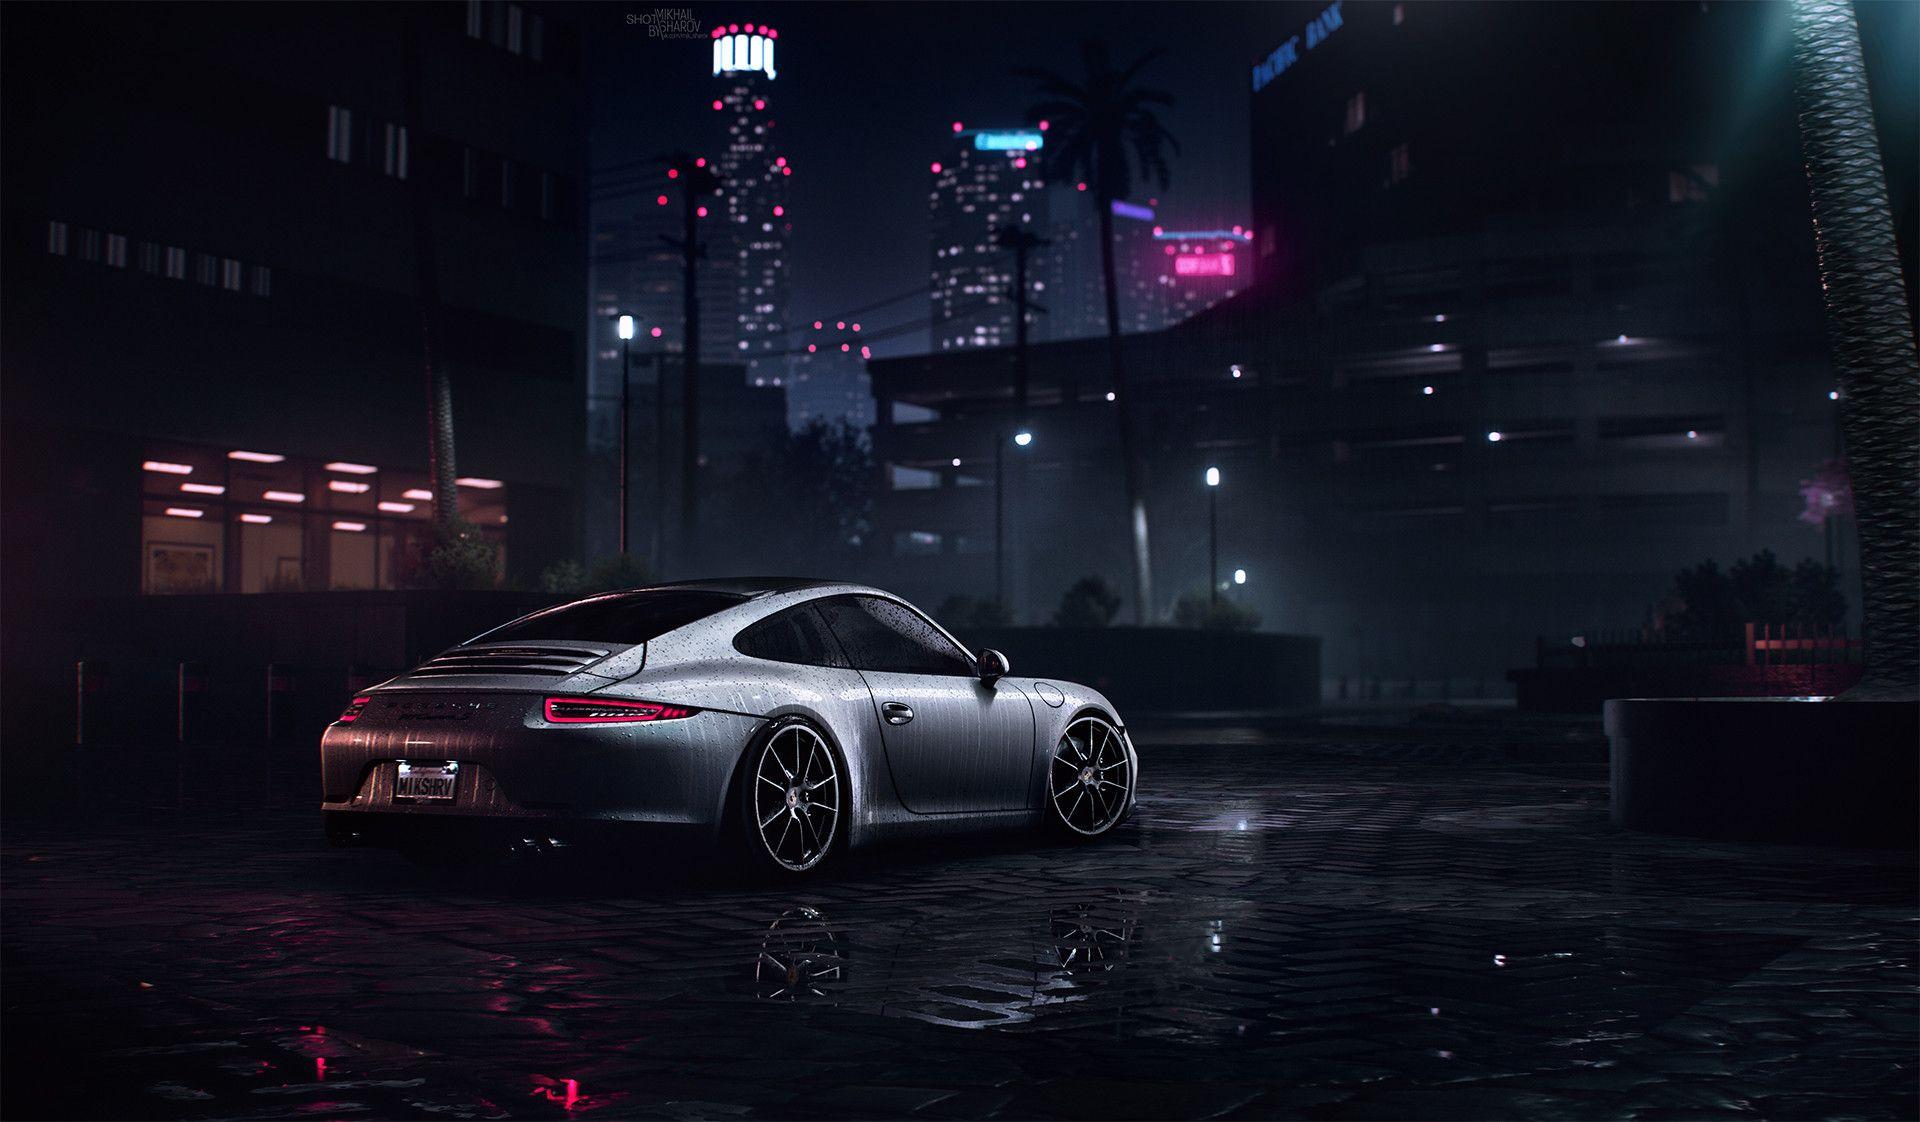 Porsche 911 Carrera S Need For Speed, HD Cars, 4k Wallpaper, Image